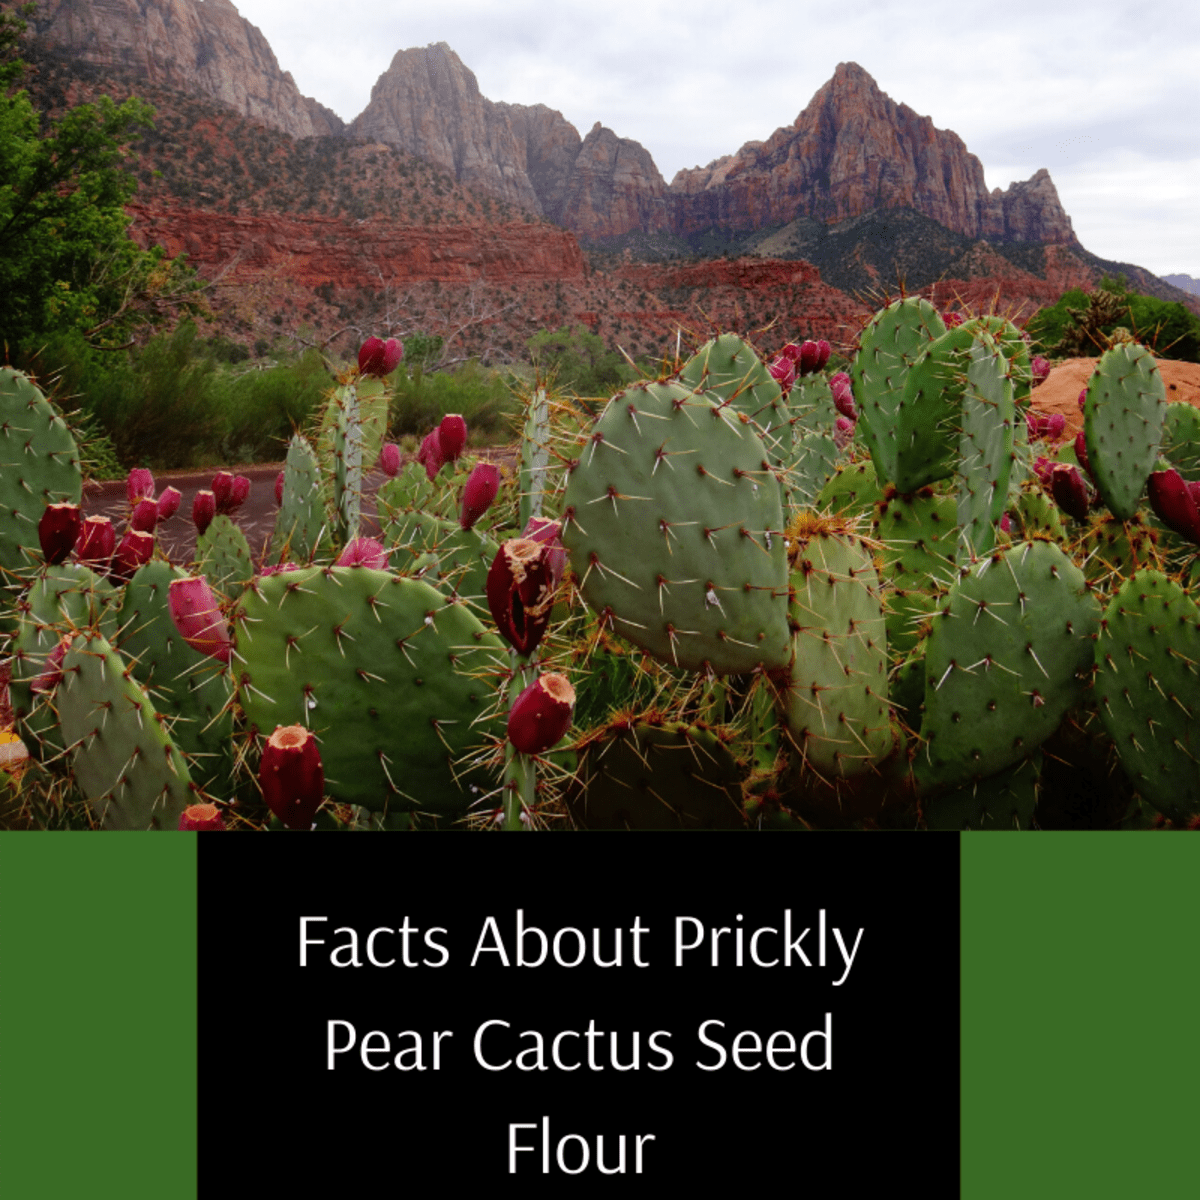 Foraging Cactus Paddles- Nopales/Nopalitos- and Prickly Pears- Tunas